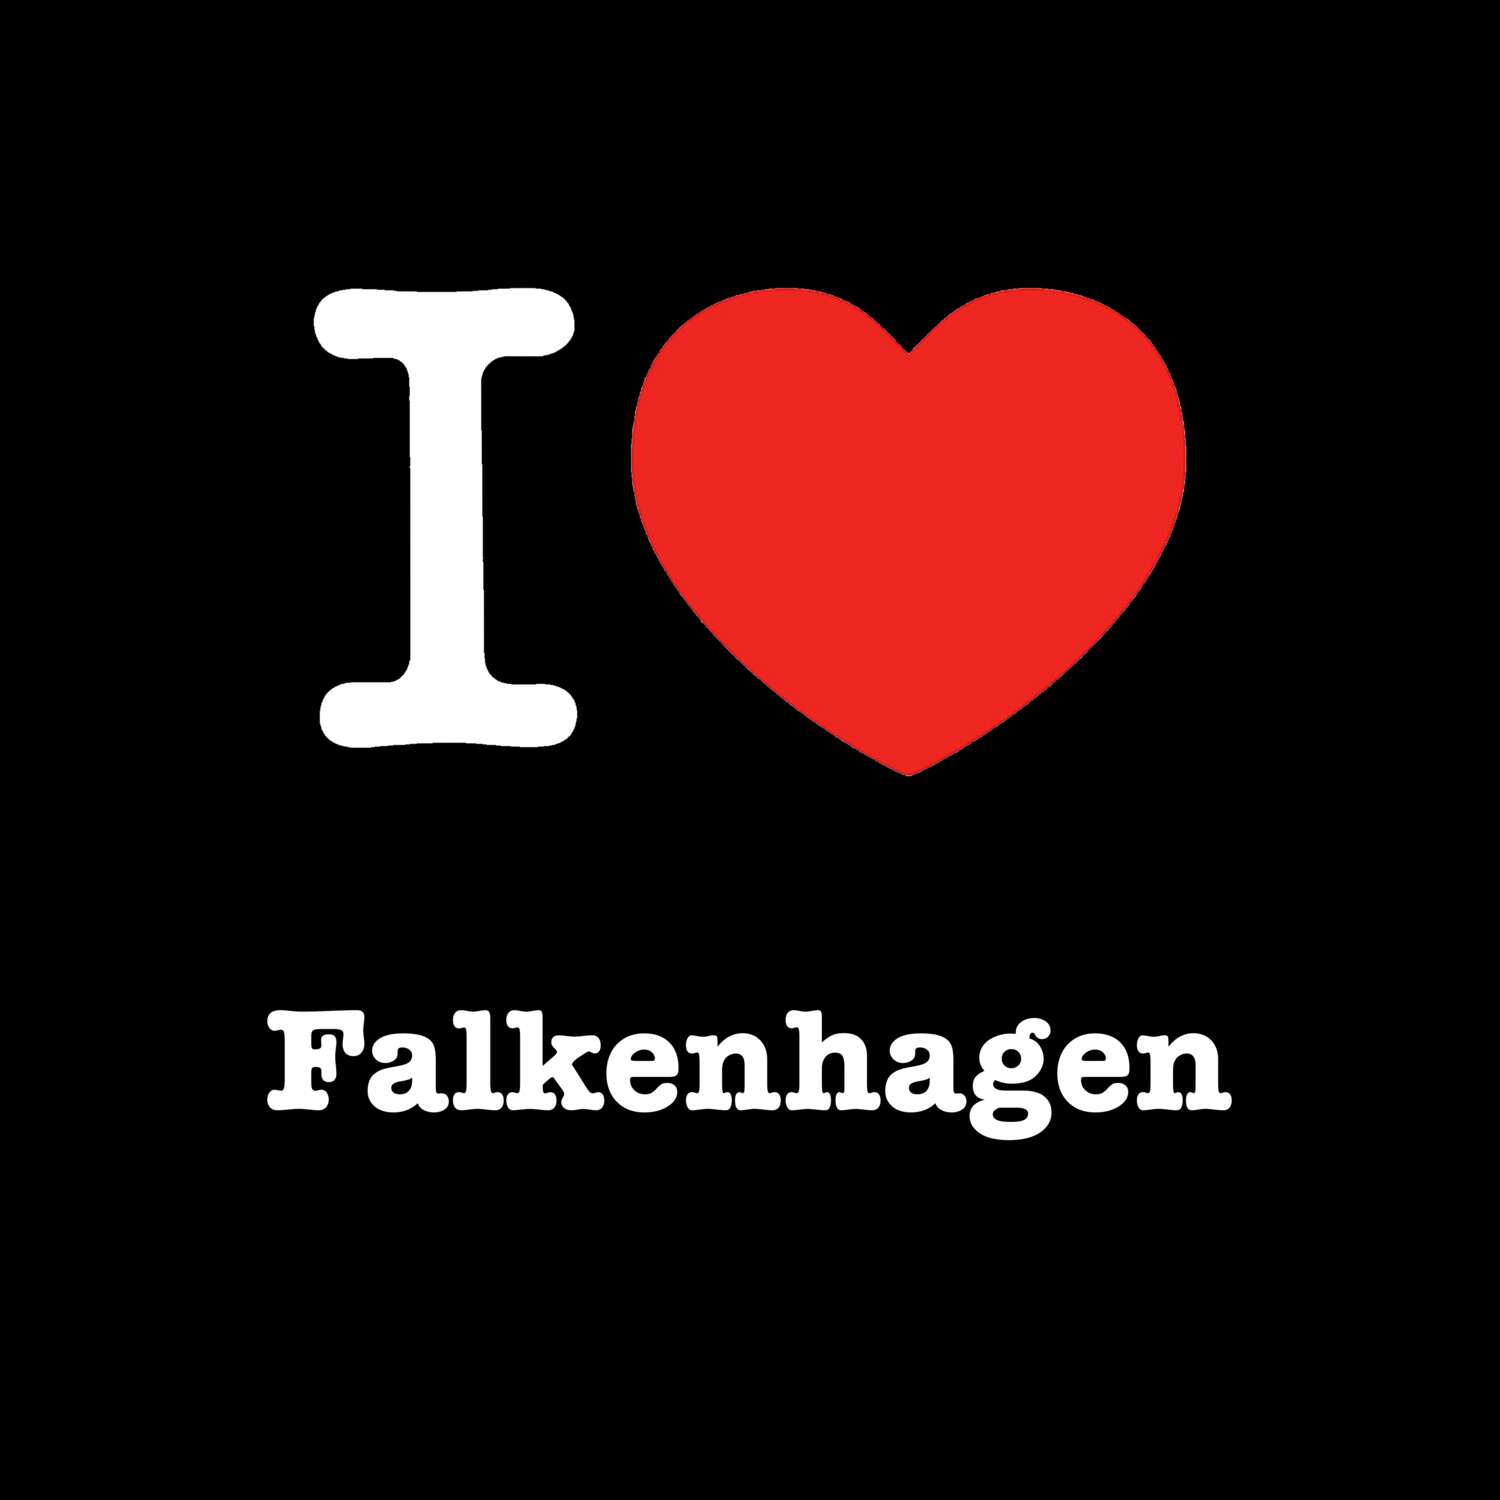 Falkenhagen T-Shirt »I love«